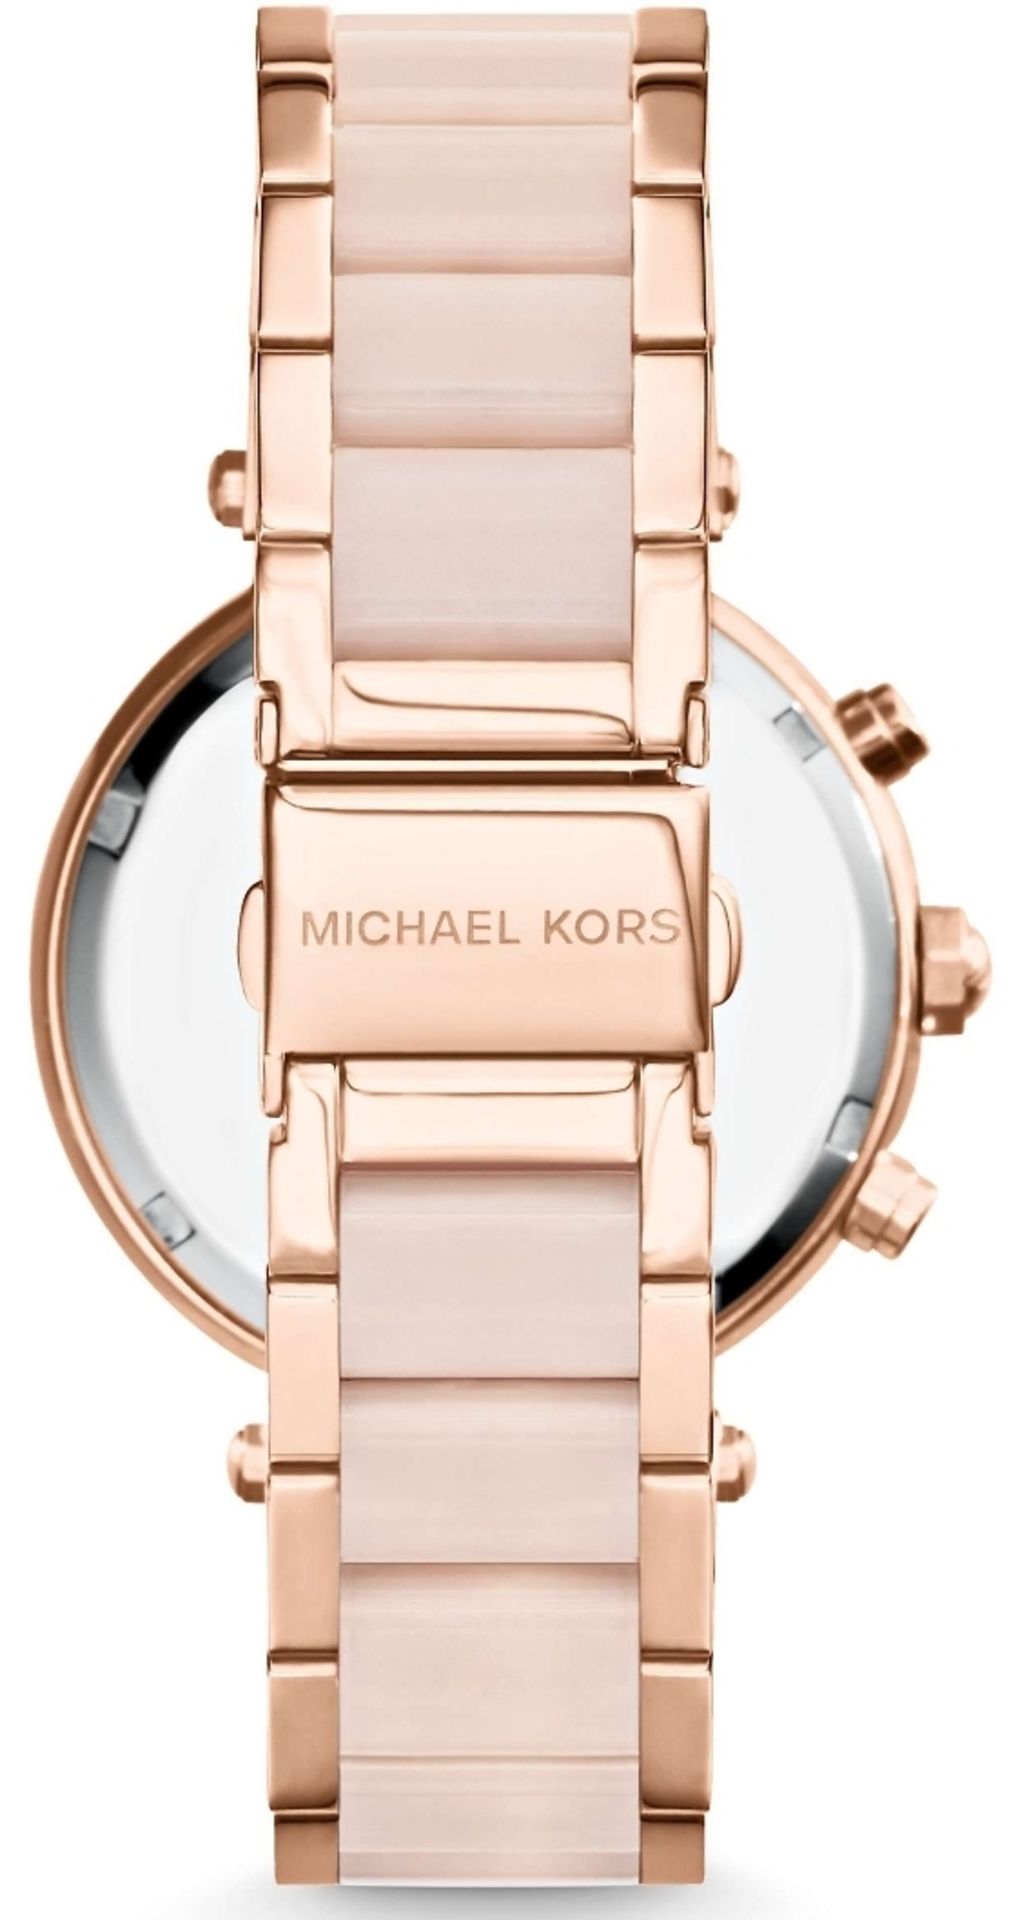 Michael Kors MK5896 Ladies Parker Rose Gold Chronograph Watch - Image 4 of 7